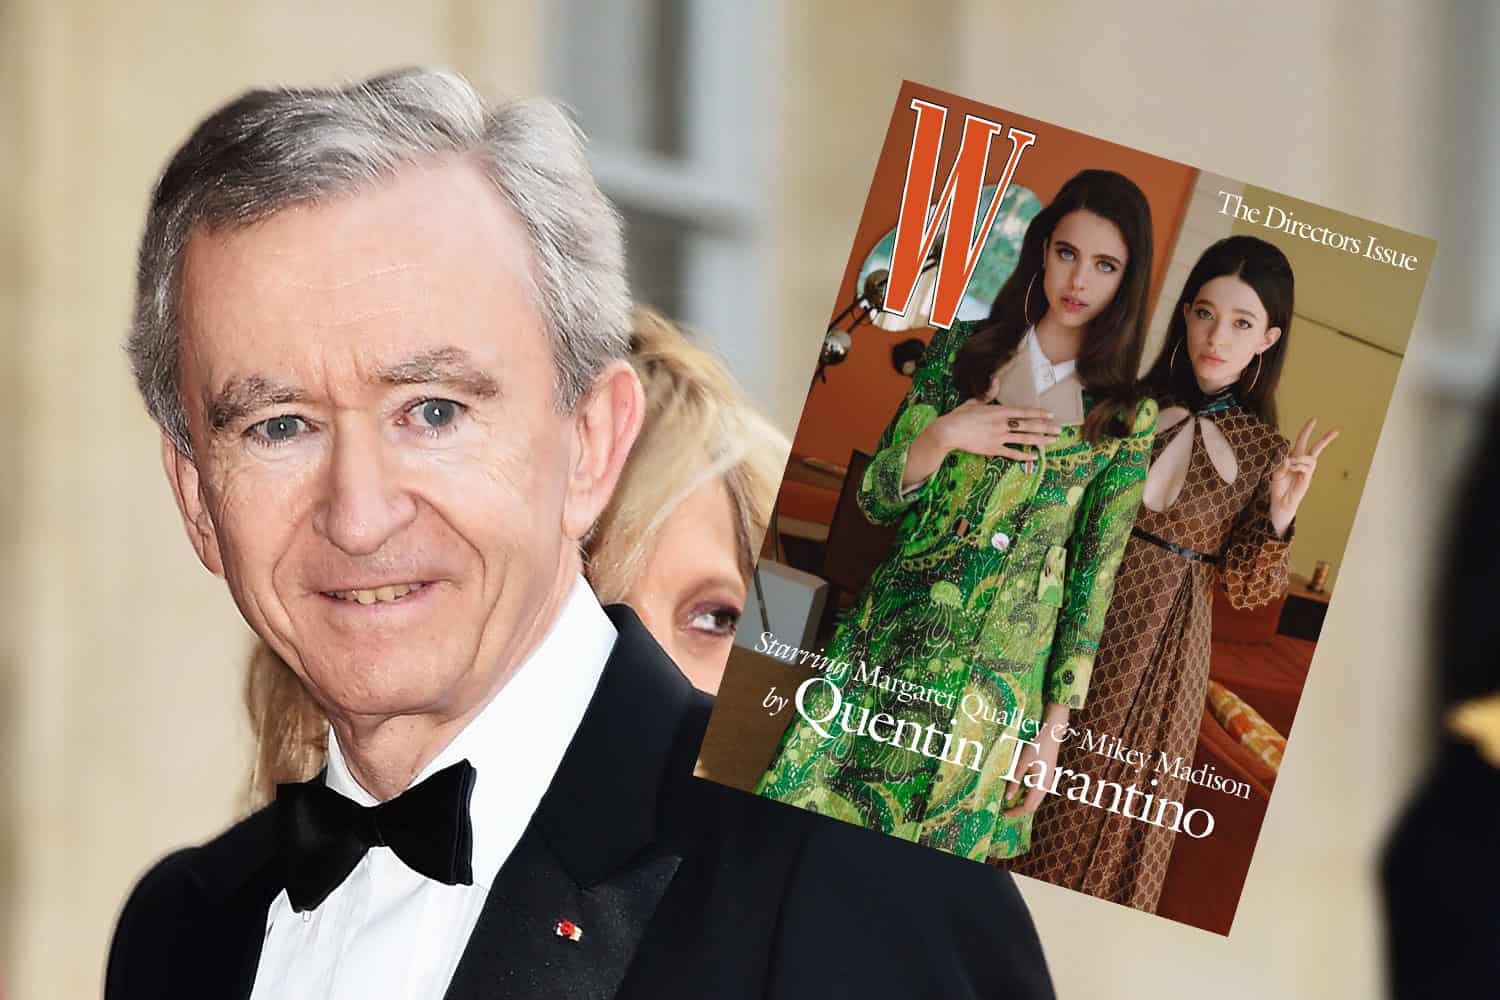 Bernard Arnault: the best guardian of luxury brands, according to